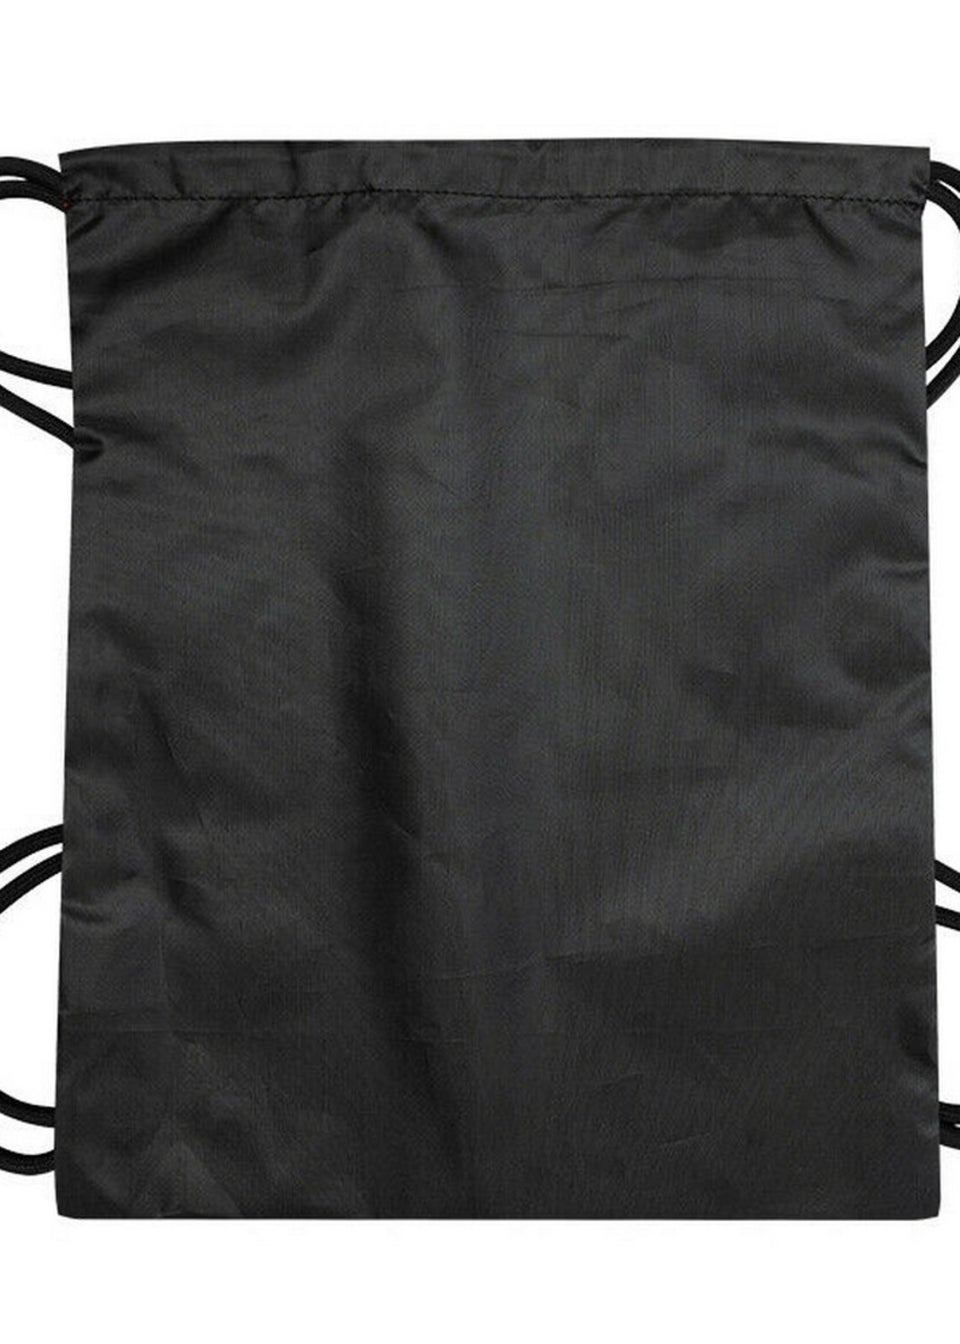 Puma Black Team Goal 23 Drawstring Bag